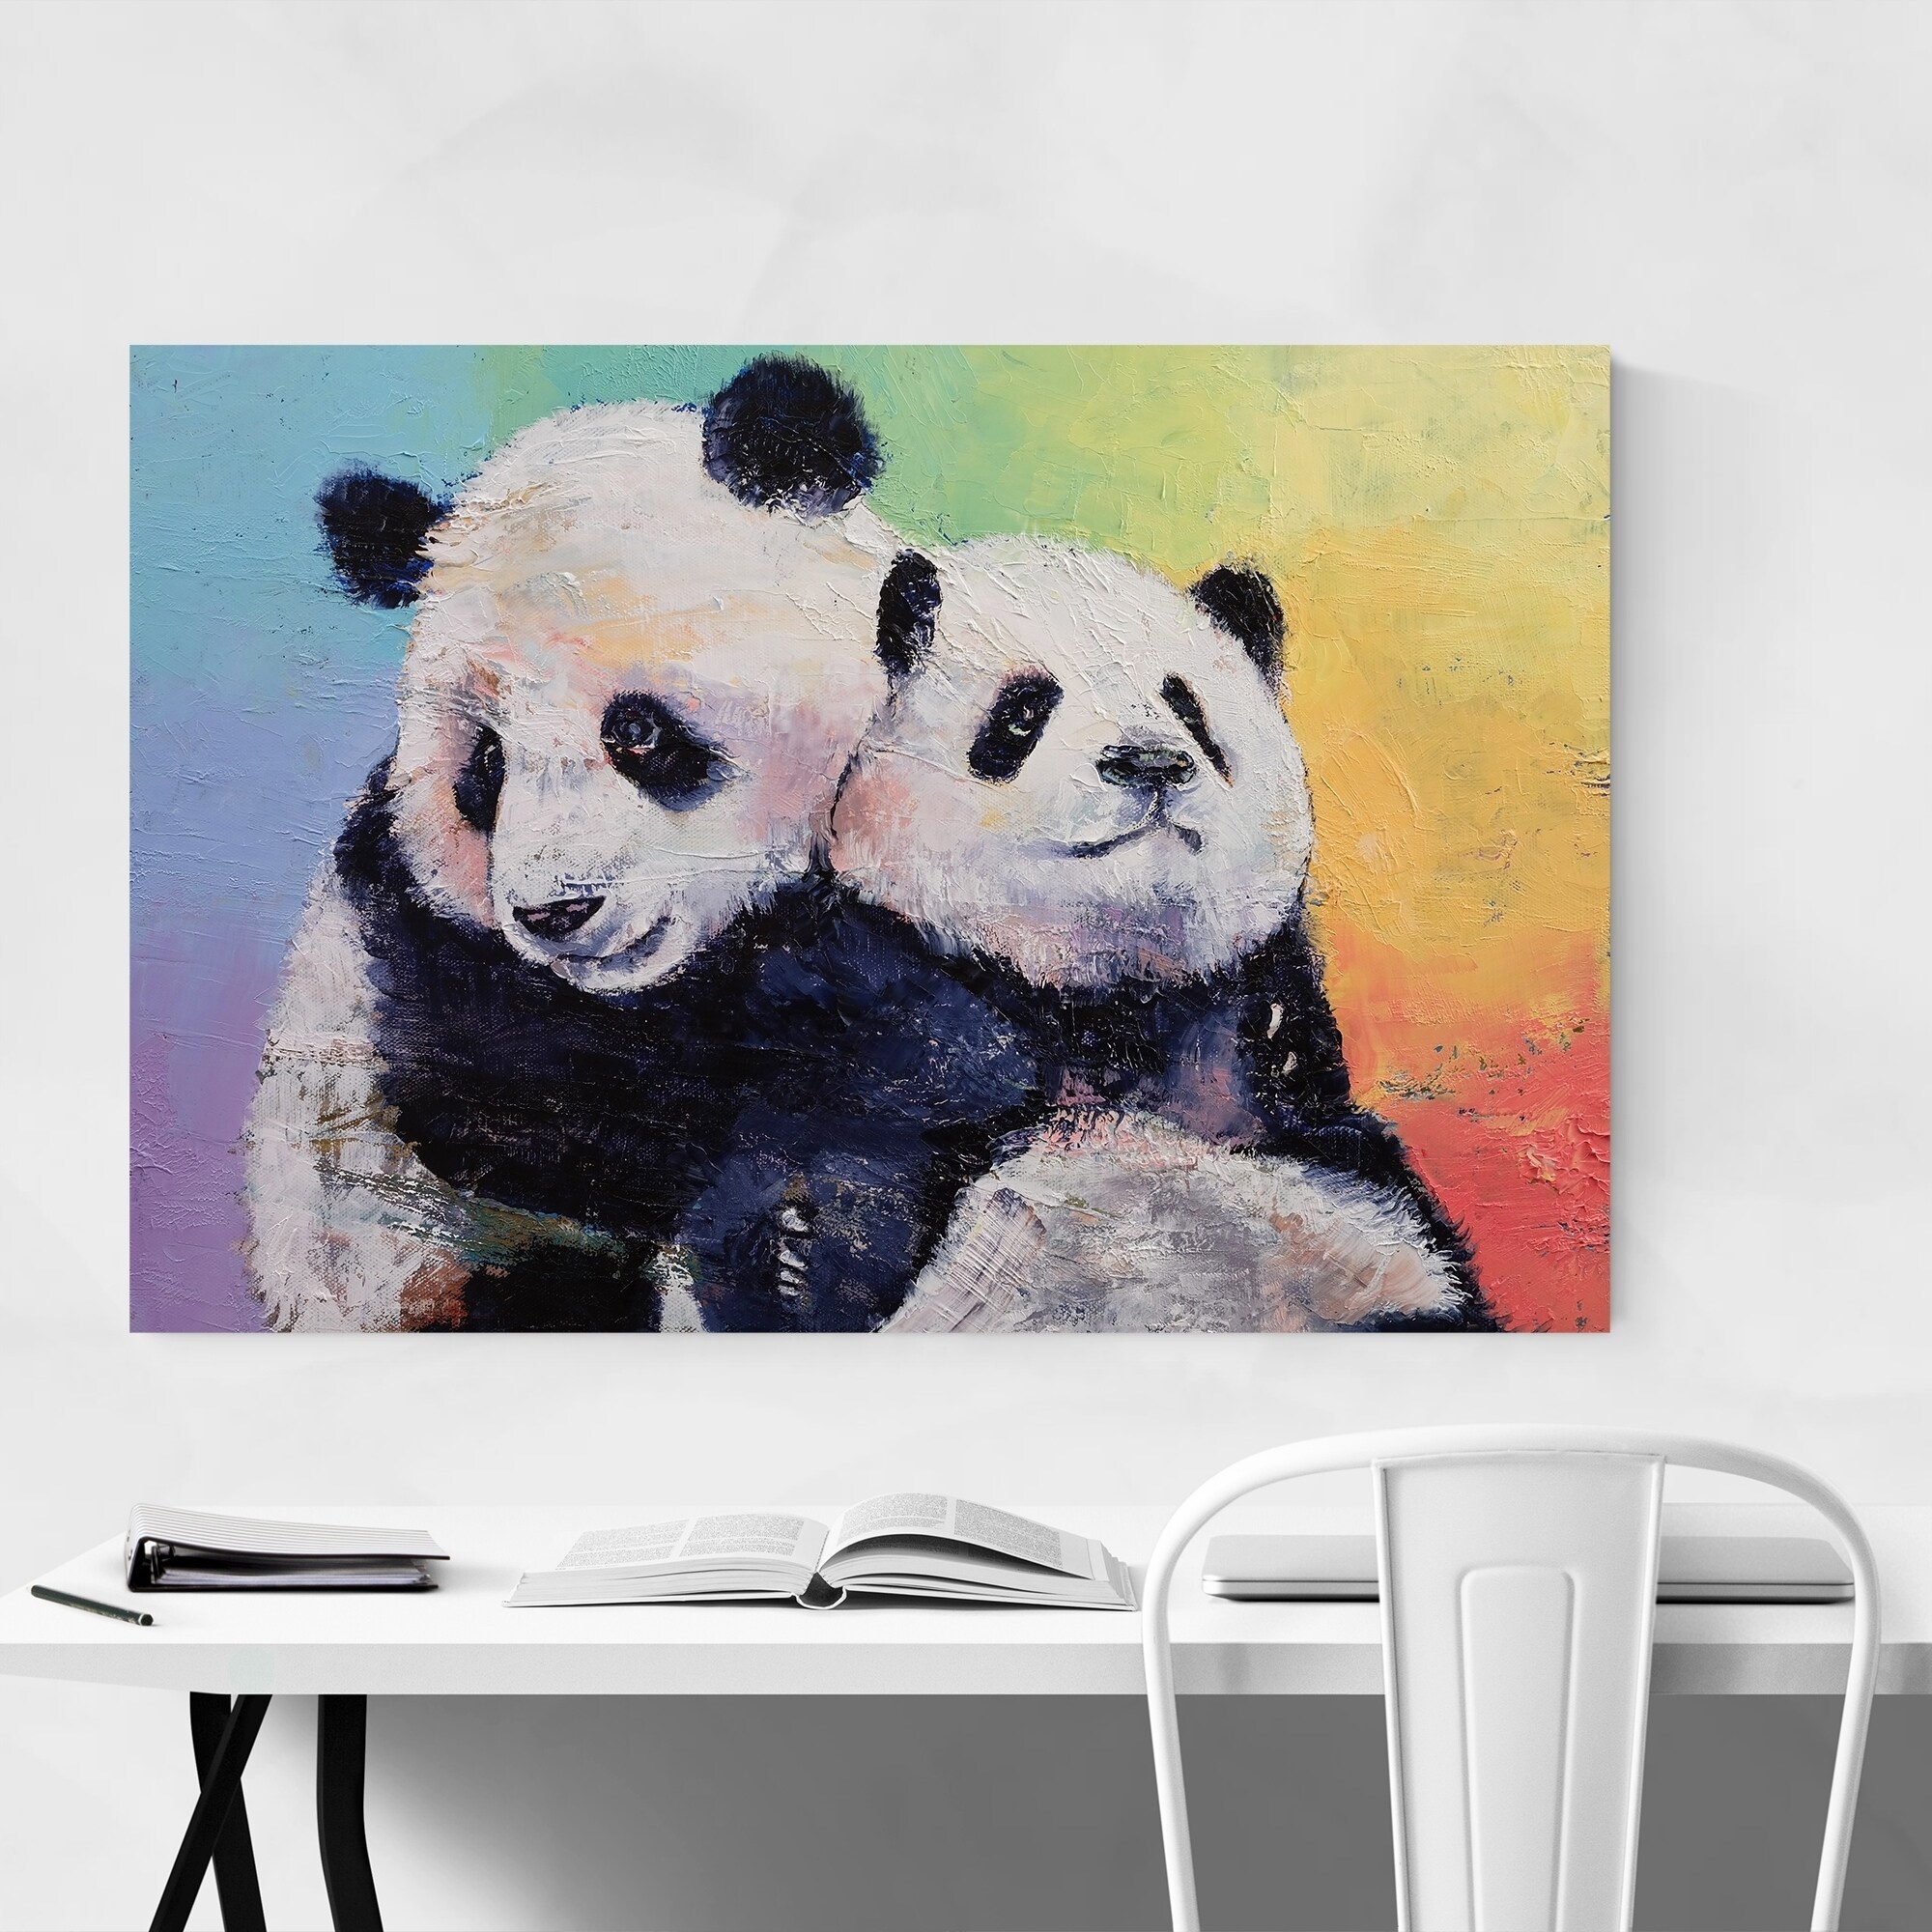 Shop Noir Gallery Panda Bear Animal Painting Canvas Wall Art Print Overstock 28722009